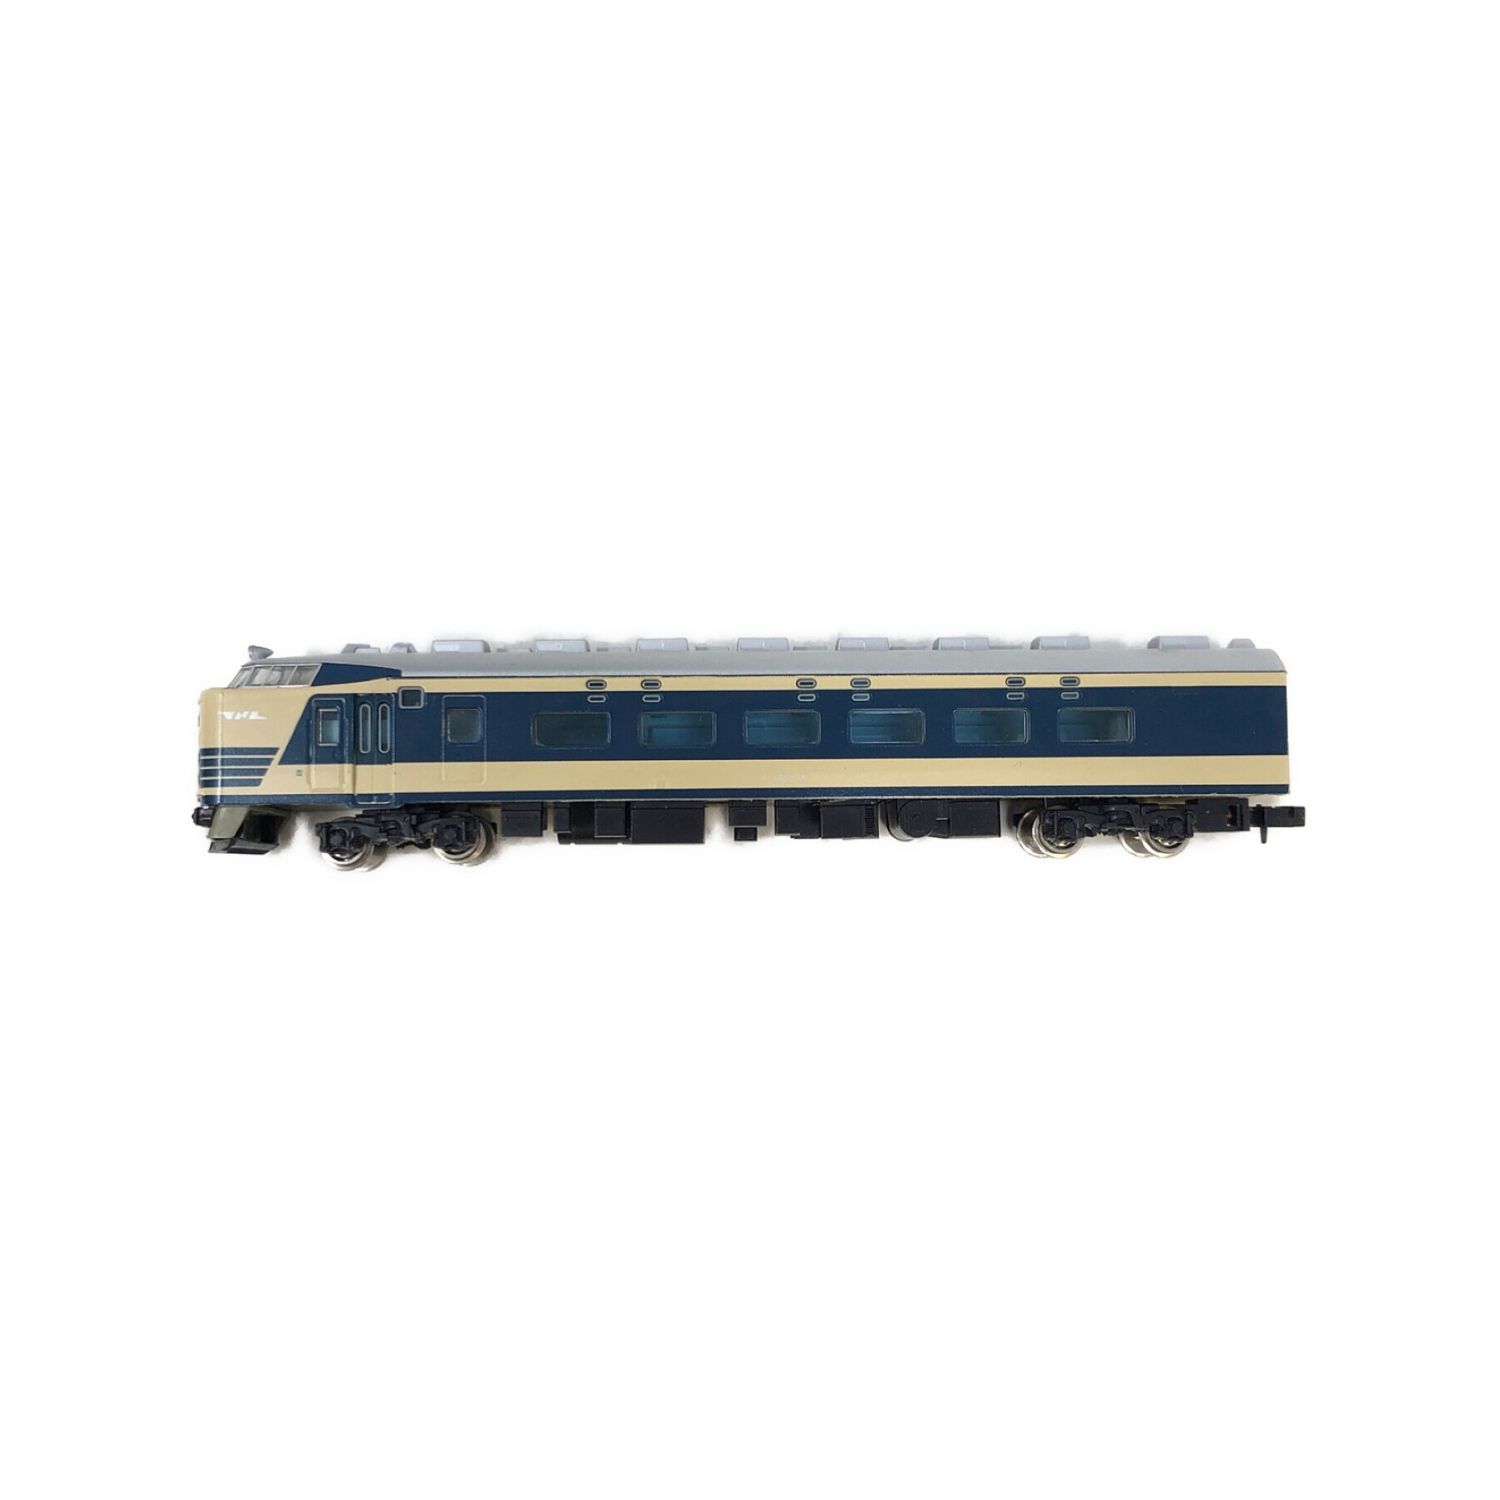 KATO (カトー) Nゲージ 10-395 583系 特急形寝台電車 7両基本セット